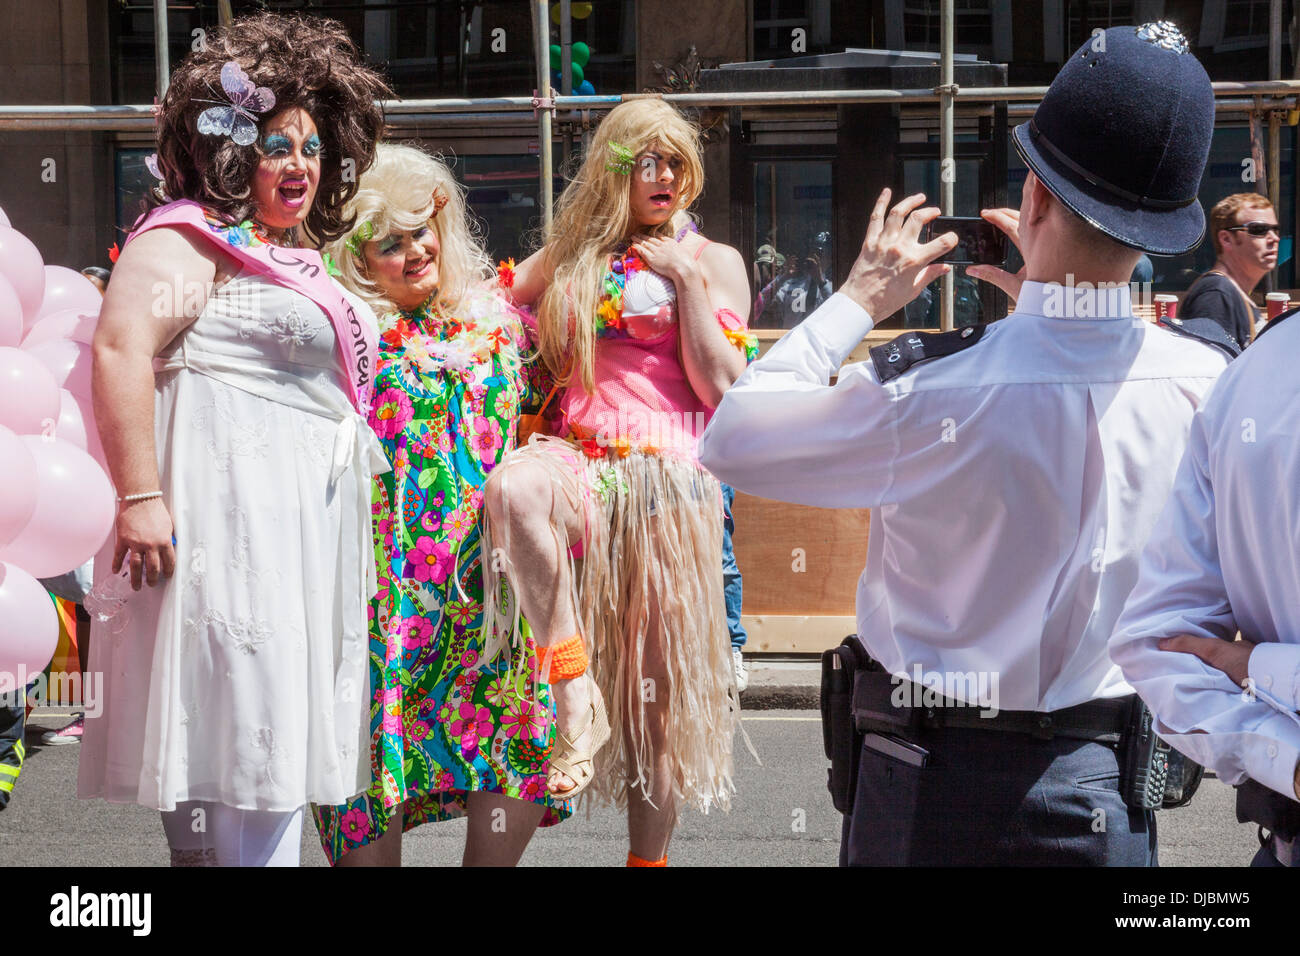 England, London, The Annual Gay Pride Parade, Policeman Taking Photo of Parade Participants Stock Photo